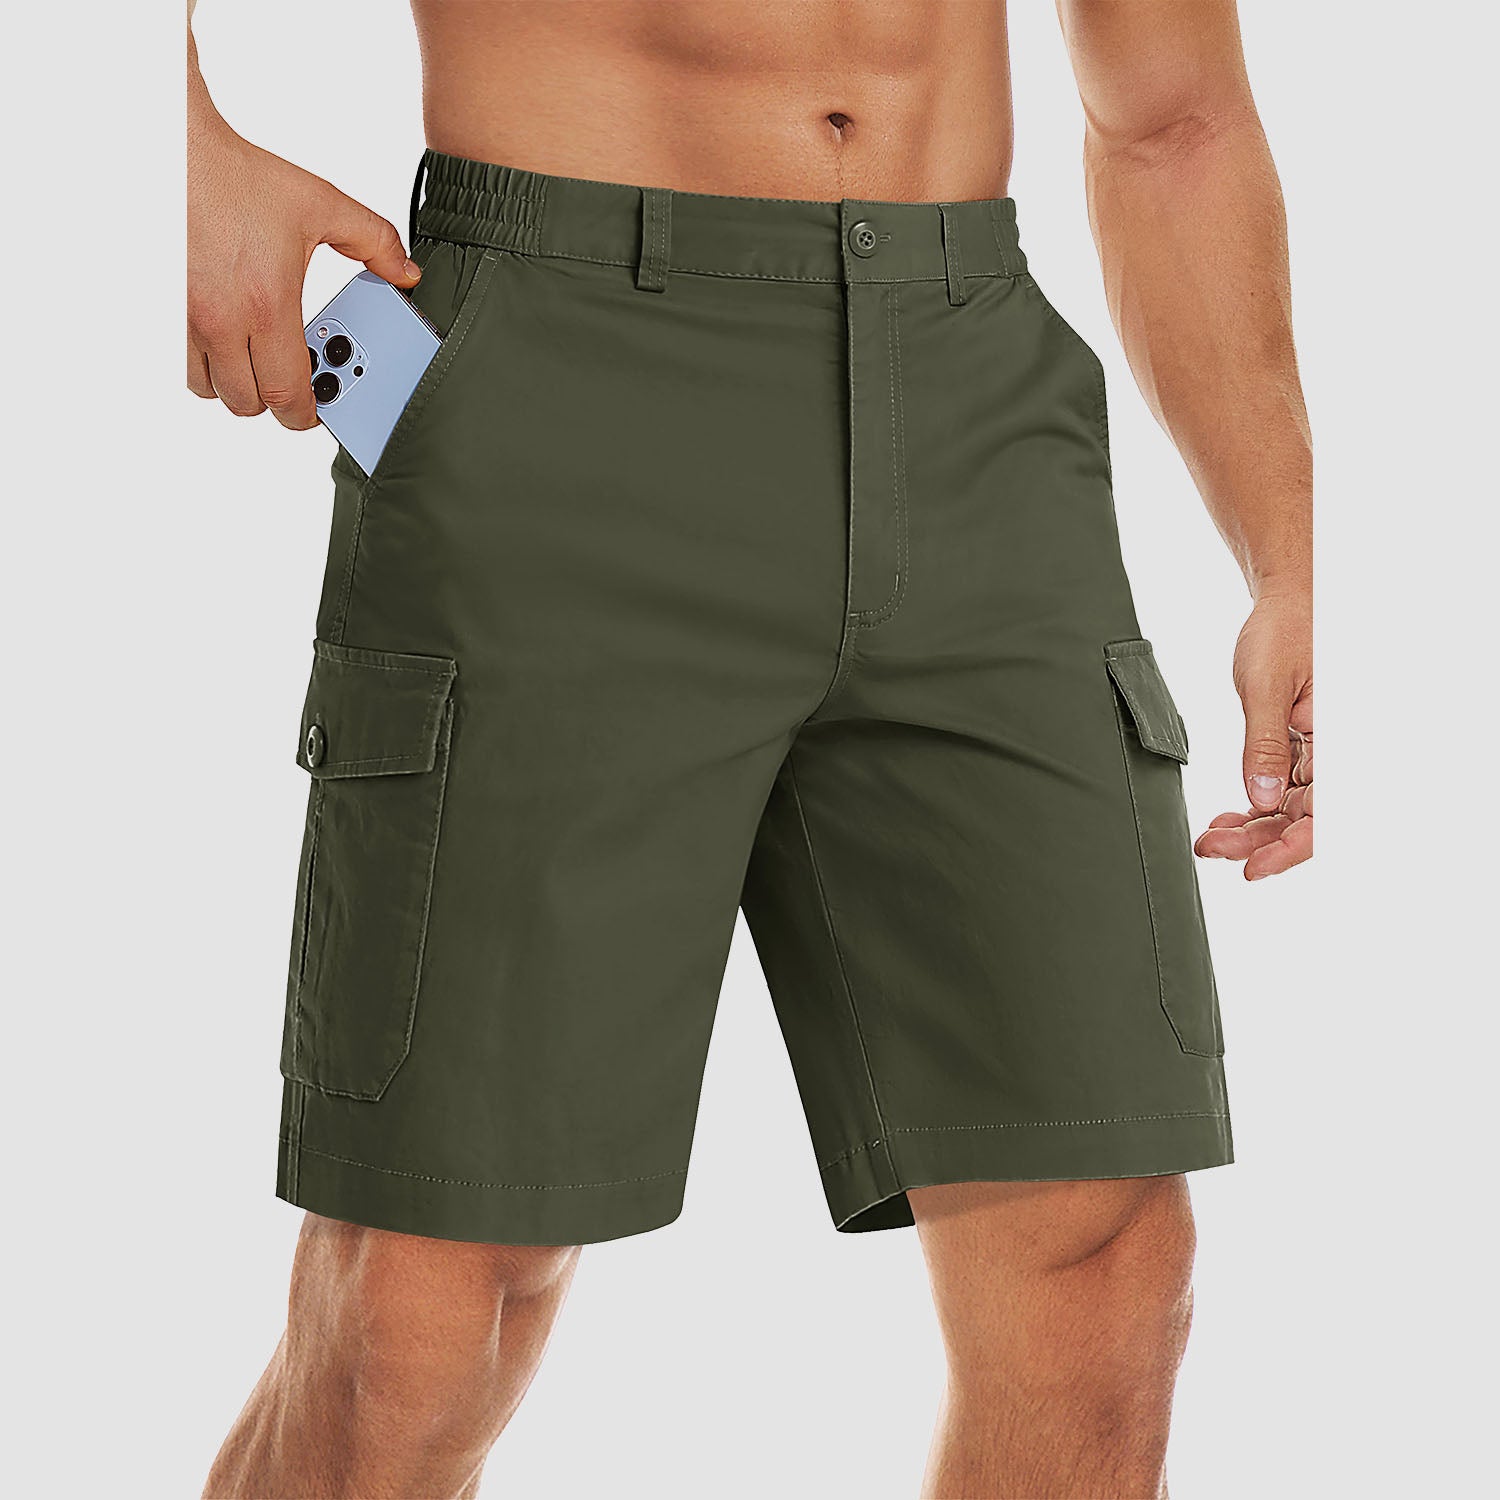 MAGCOMSEN Men's Work Shorts Shorts Cargo Shorts Long Shorts 3/4